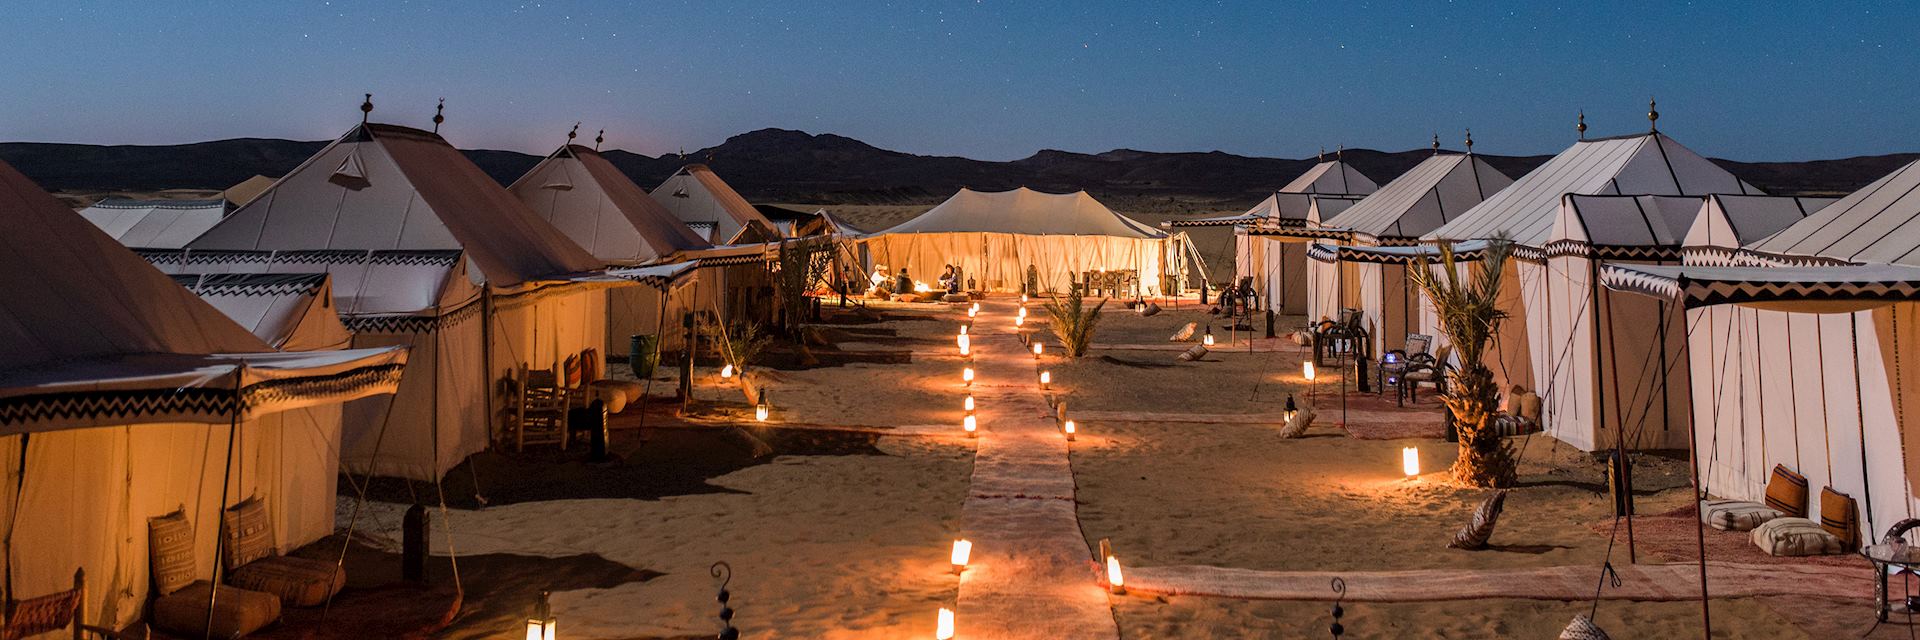 Desert Luxury Camp, Erg Chebbi